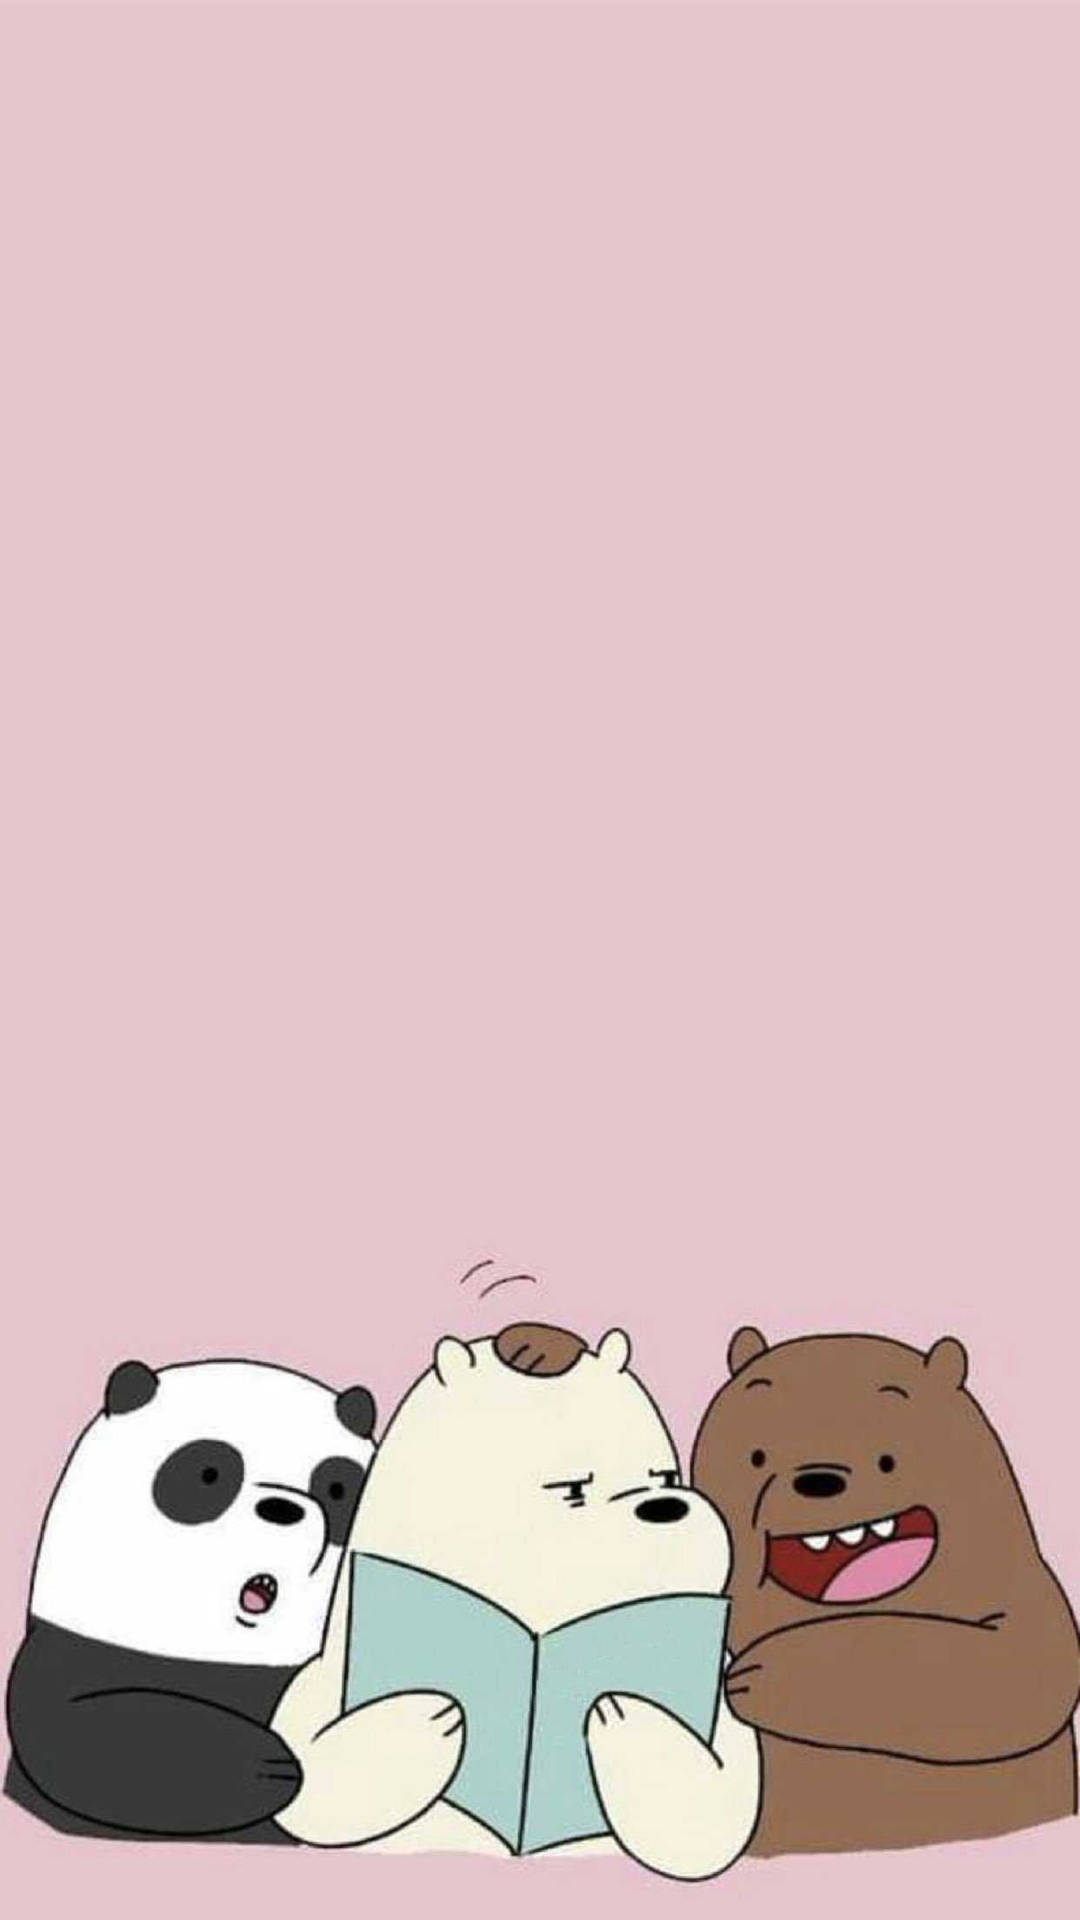 Three Playful Bears